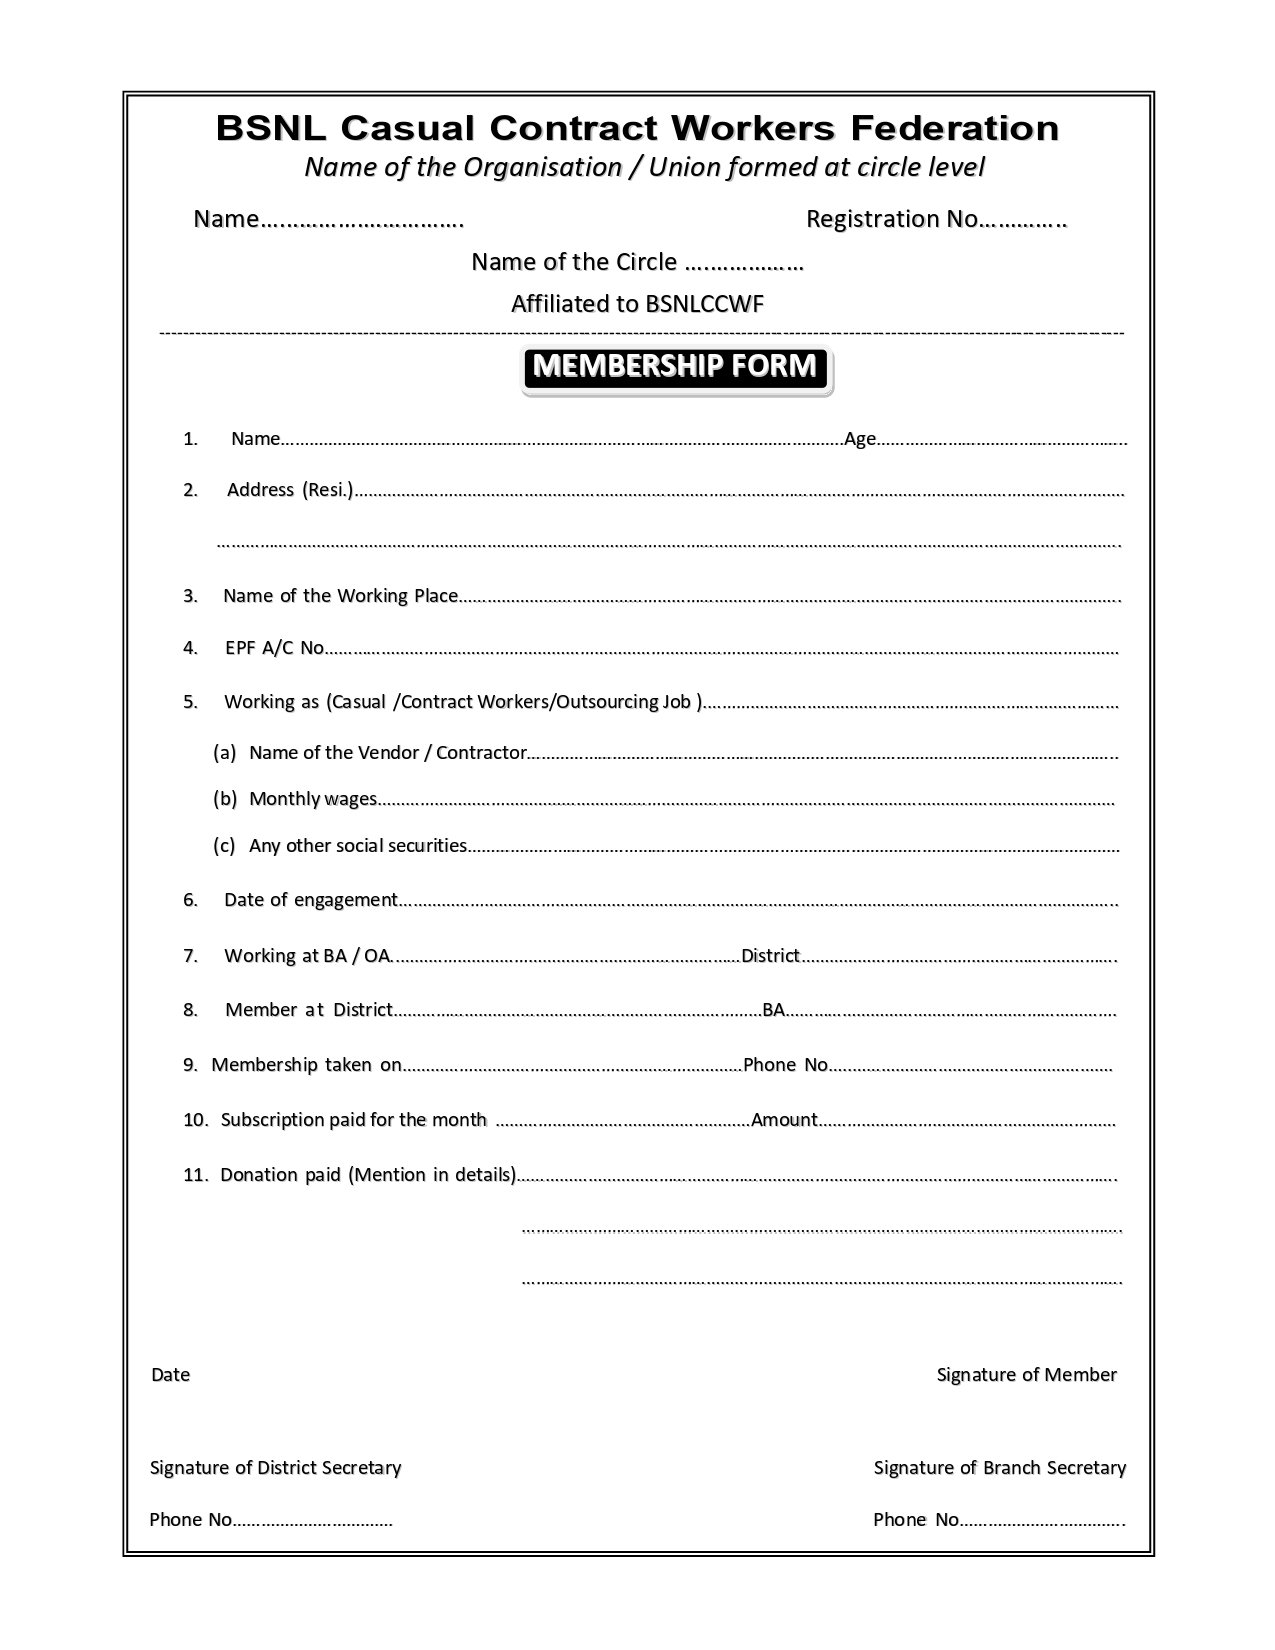 Specimen copy of the Membership Form. Image 